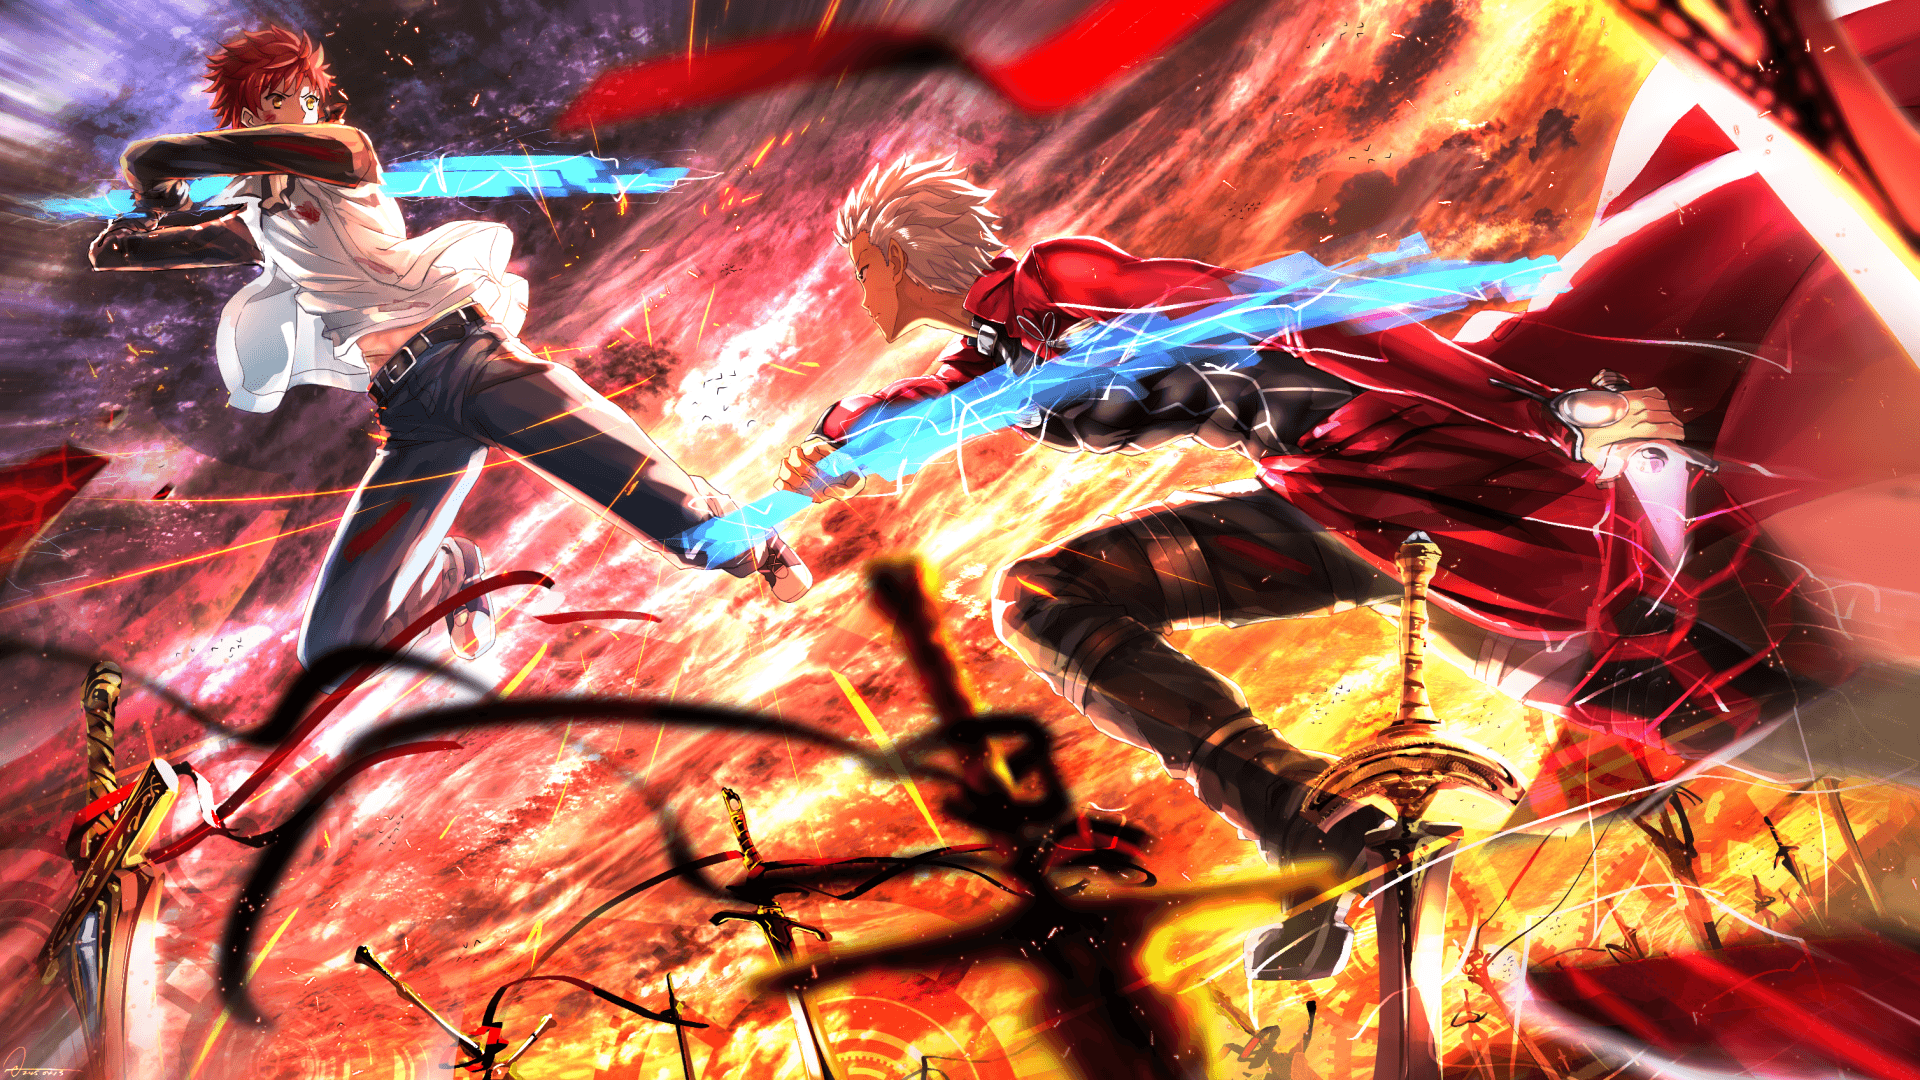 Wallpaper Anime Fate Zero Gilgamesh Saber Archer Background  Download  Free Image